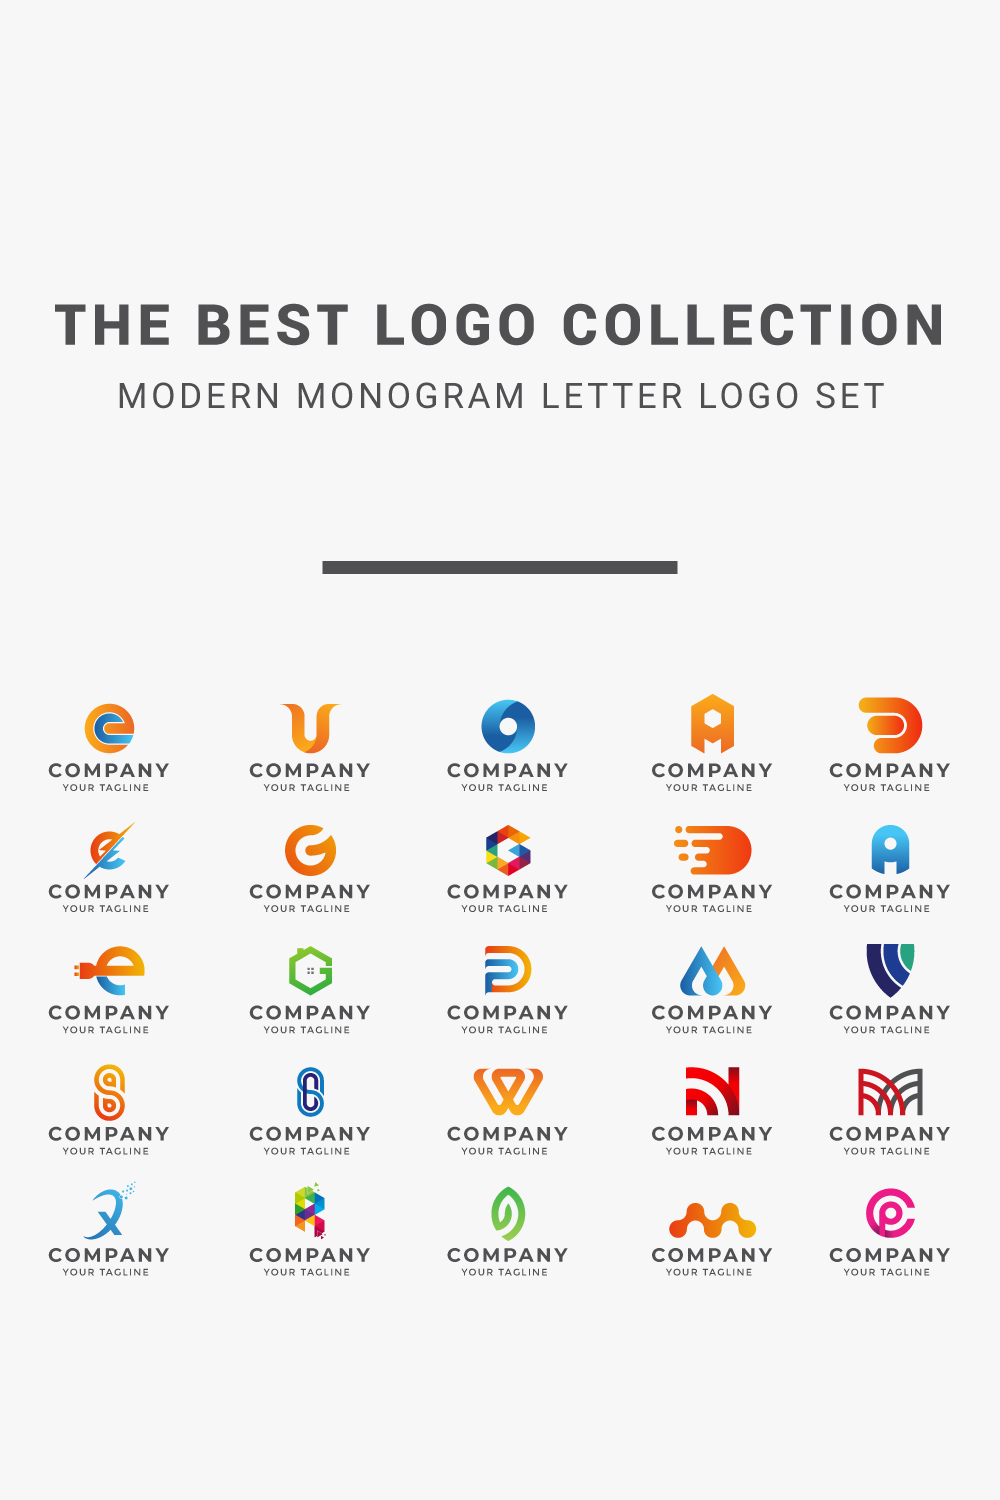 25 Logos Bundle Modern Monogram Letter Logo Set for different types of businesses pinterest preview image.